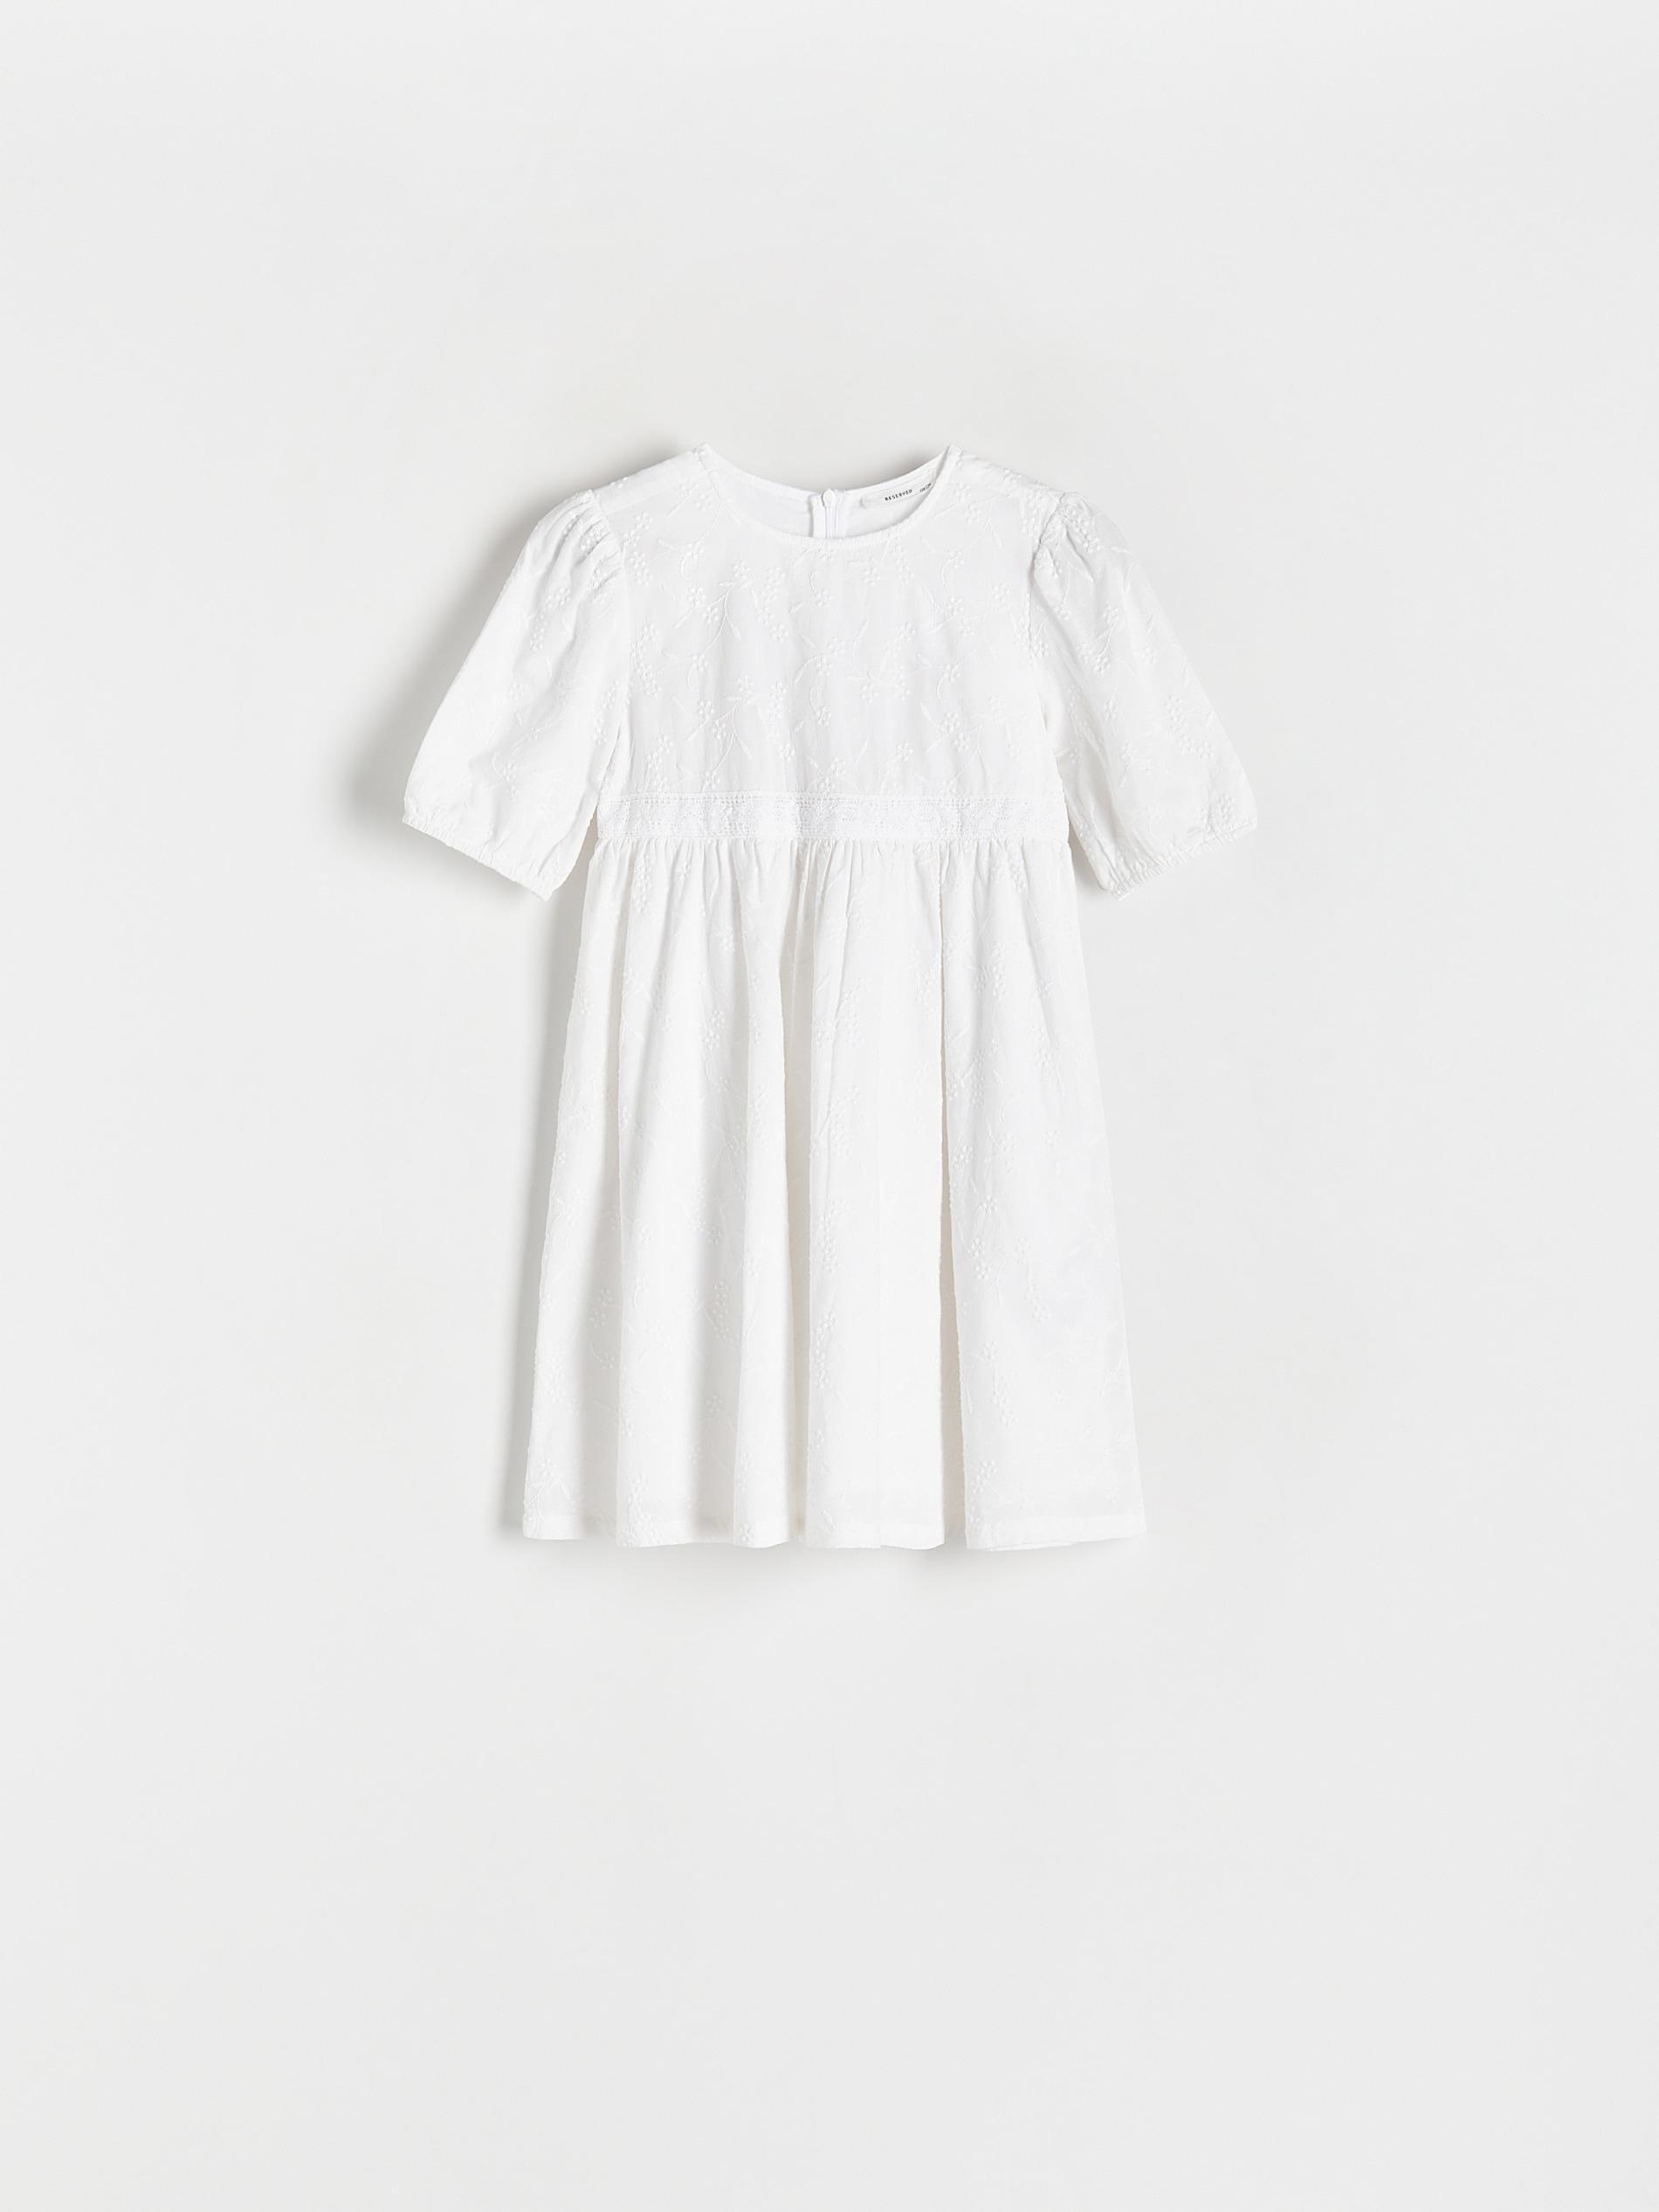 Reserved - Cream Floral Pattern Dress, Kids Girls